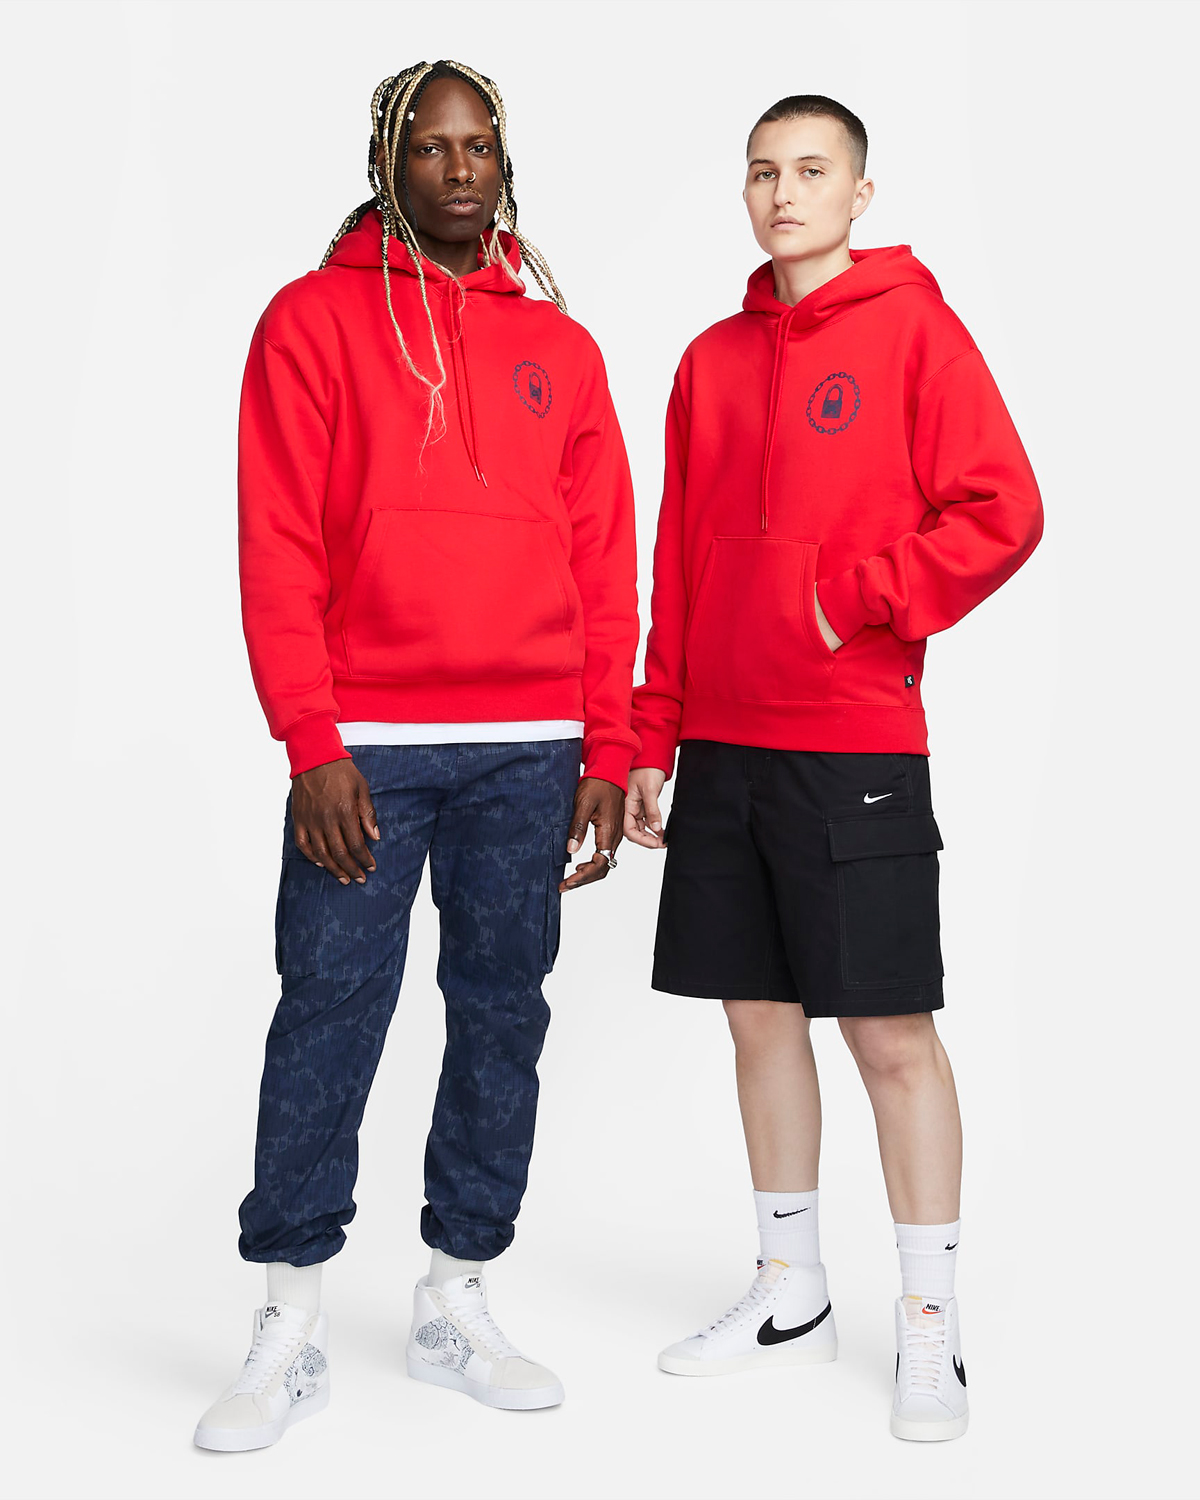 Nike-SB-Hoodie-University-Red-Navy-Outfit